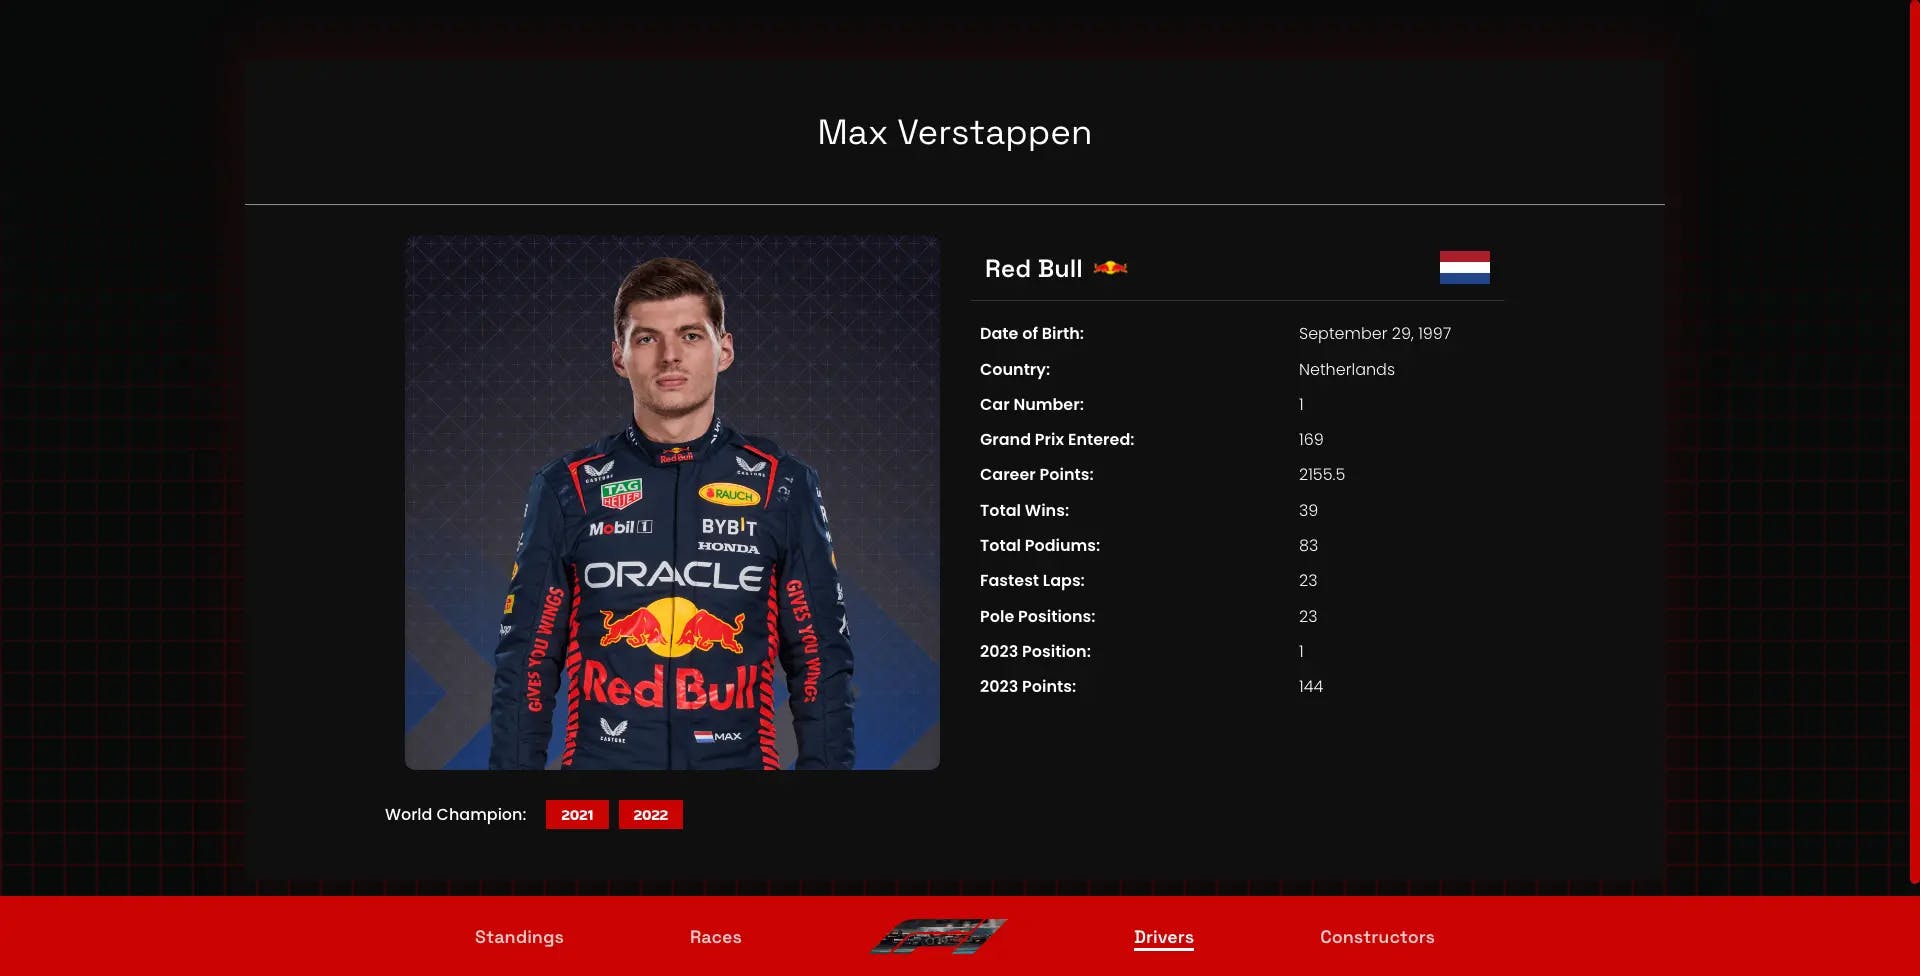 Max verstappen and his statistics on F1Scoreboard